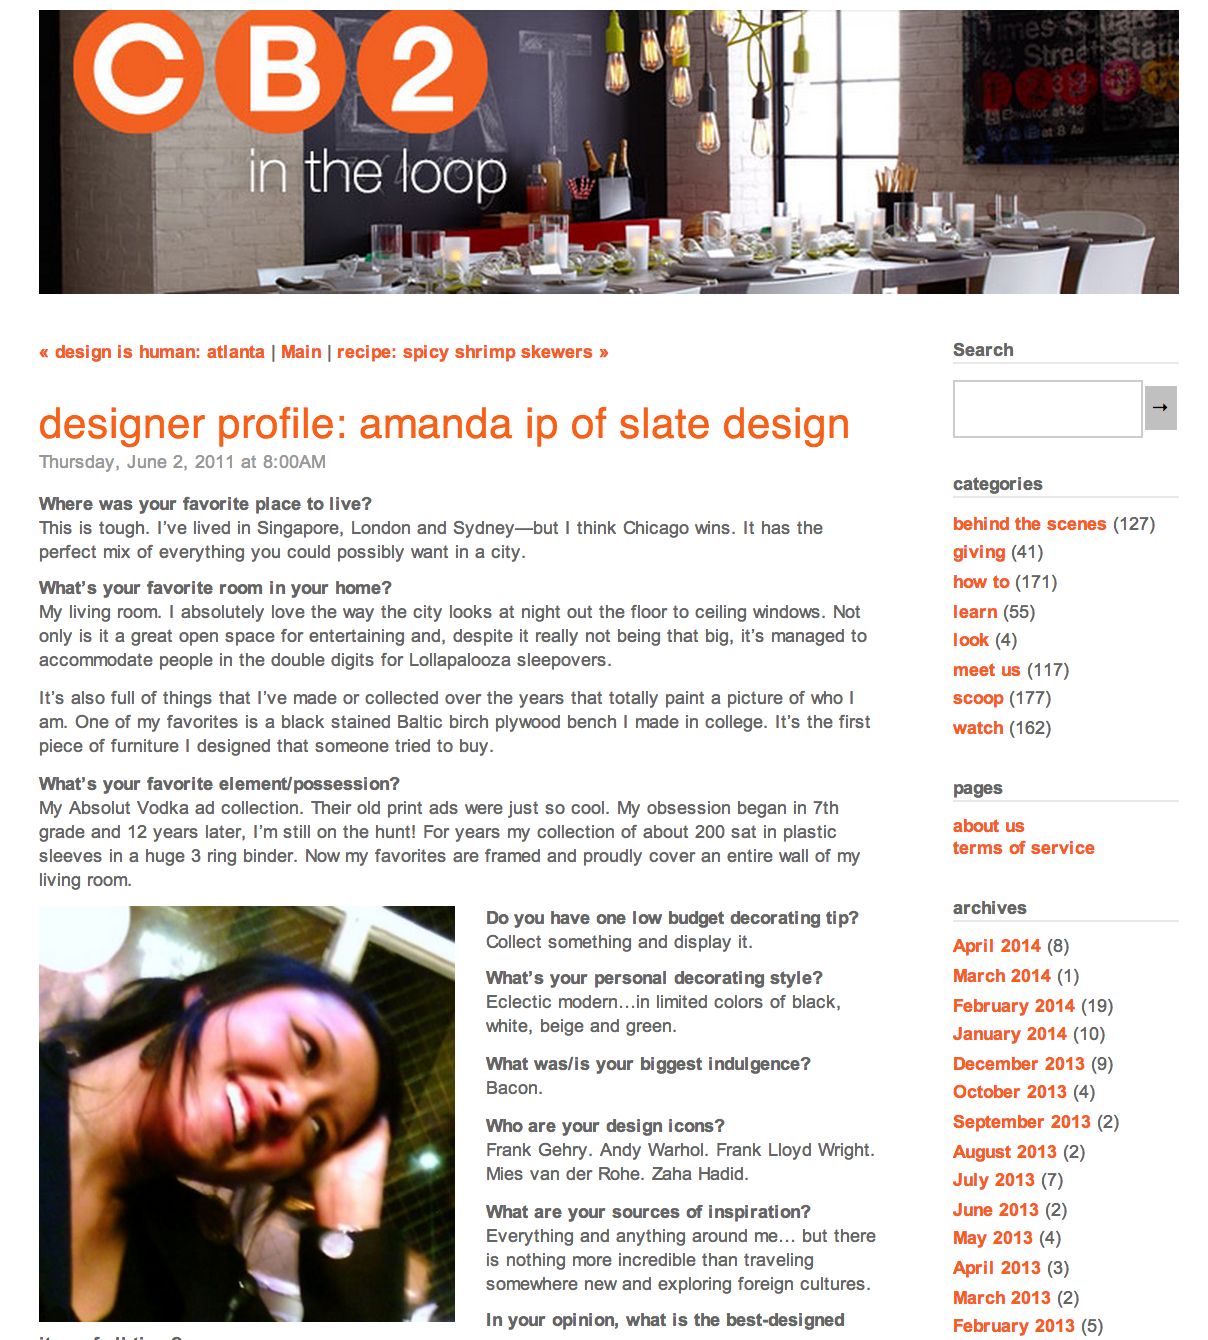 CB2 : DESIGNER PROFILE